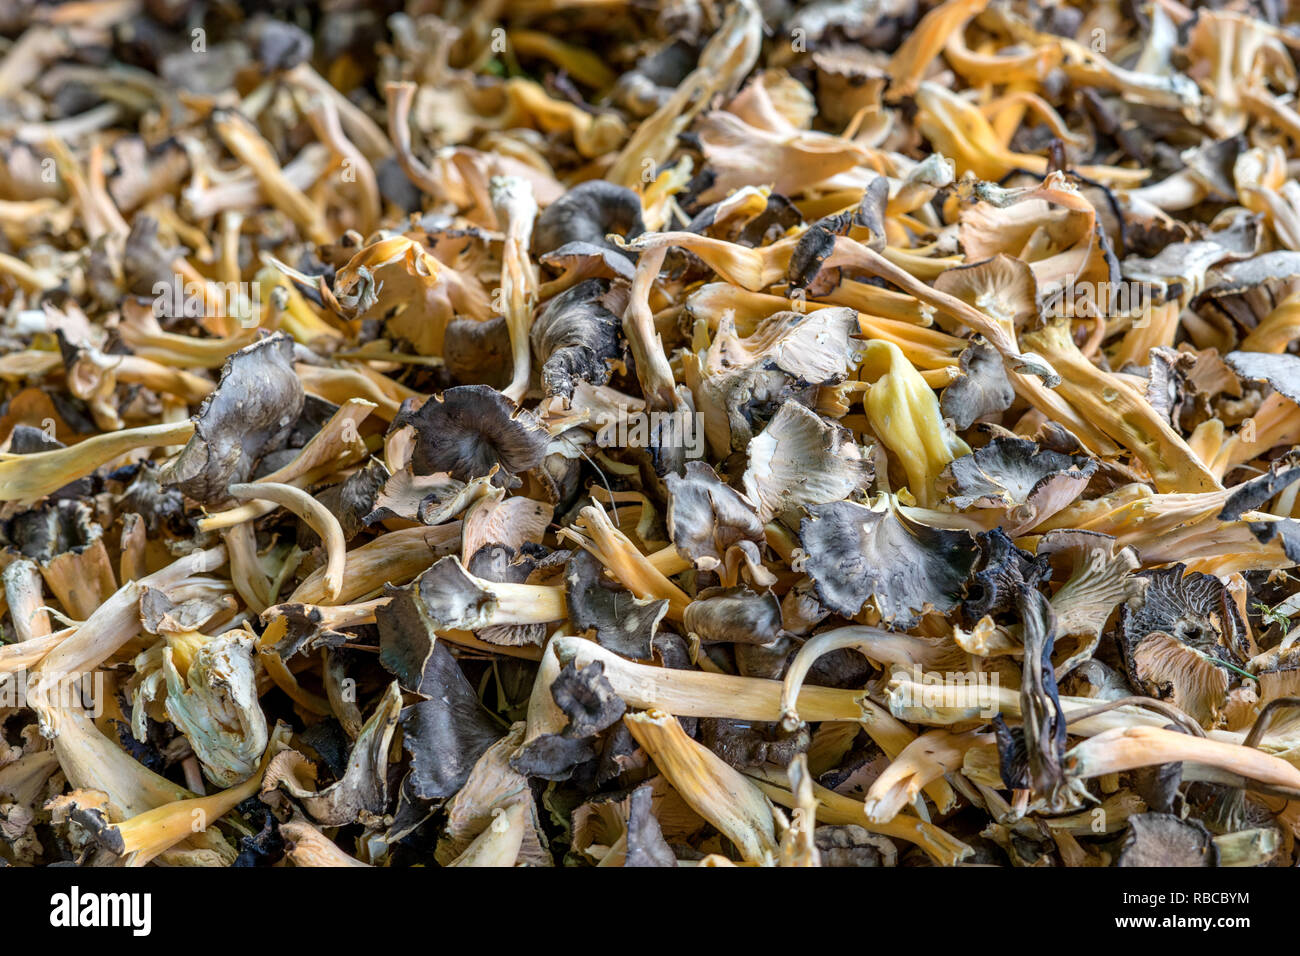 fresh, brown wild mushrooms in the market Stock Photo